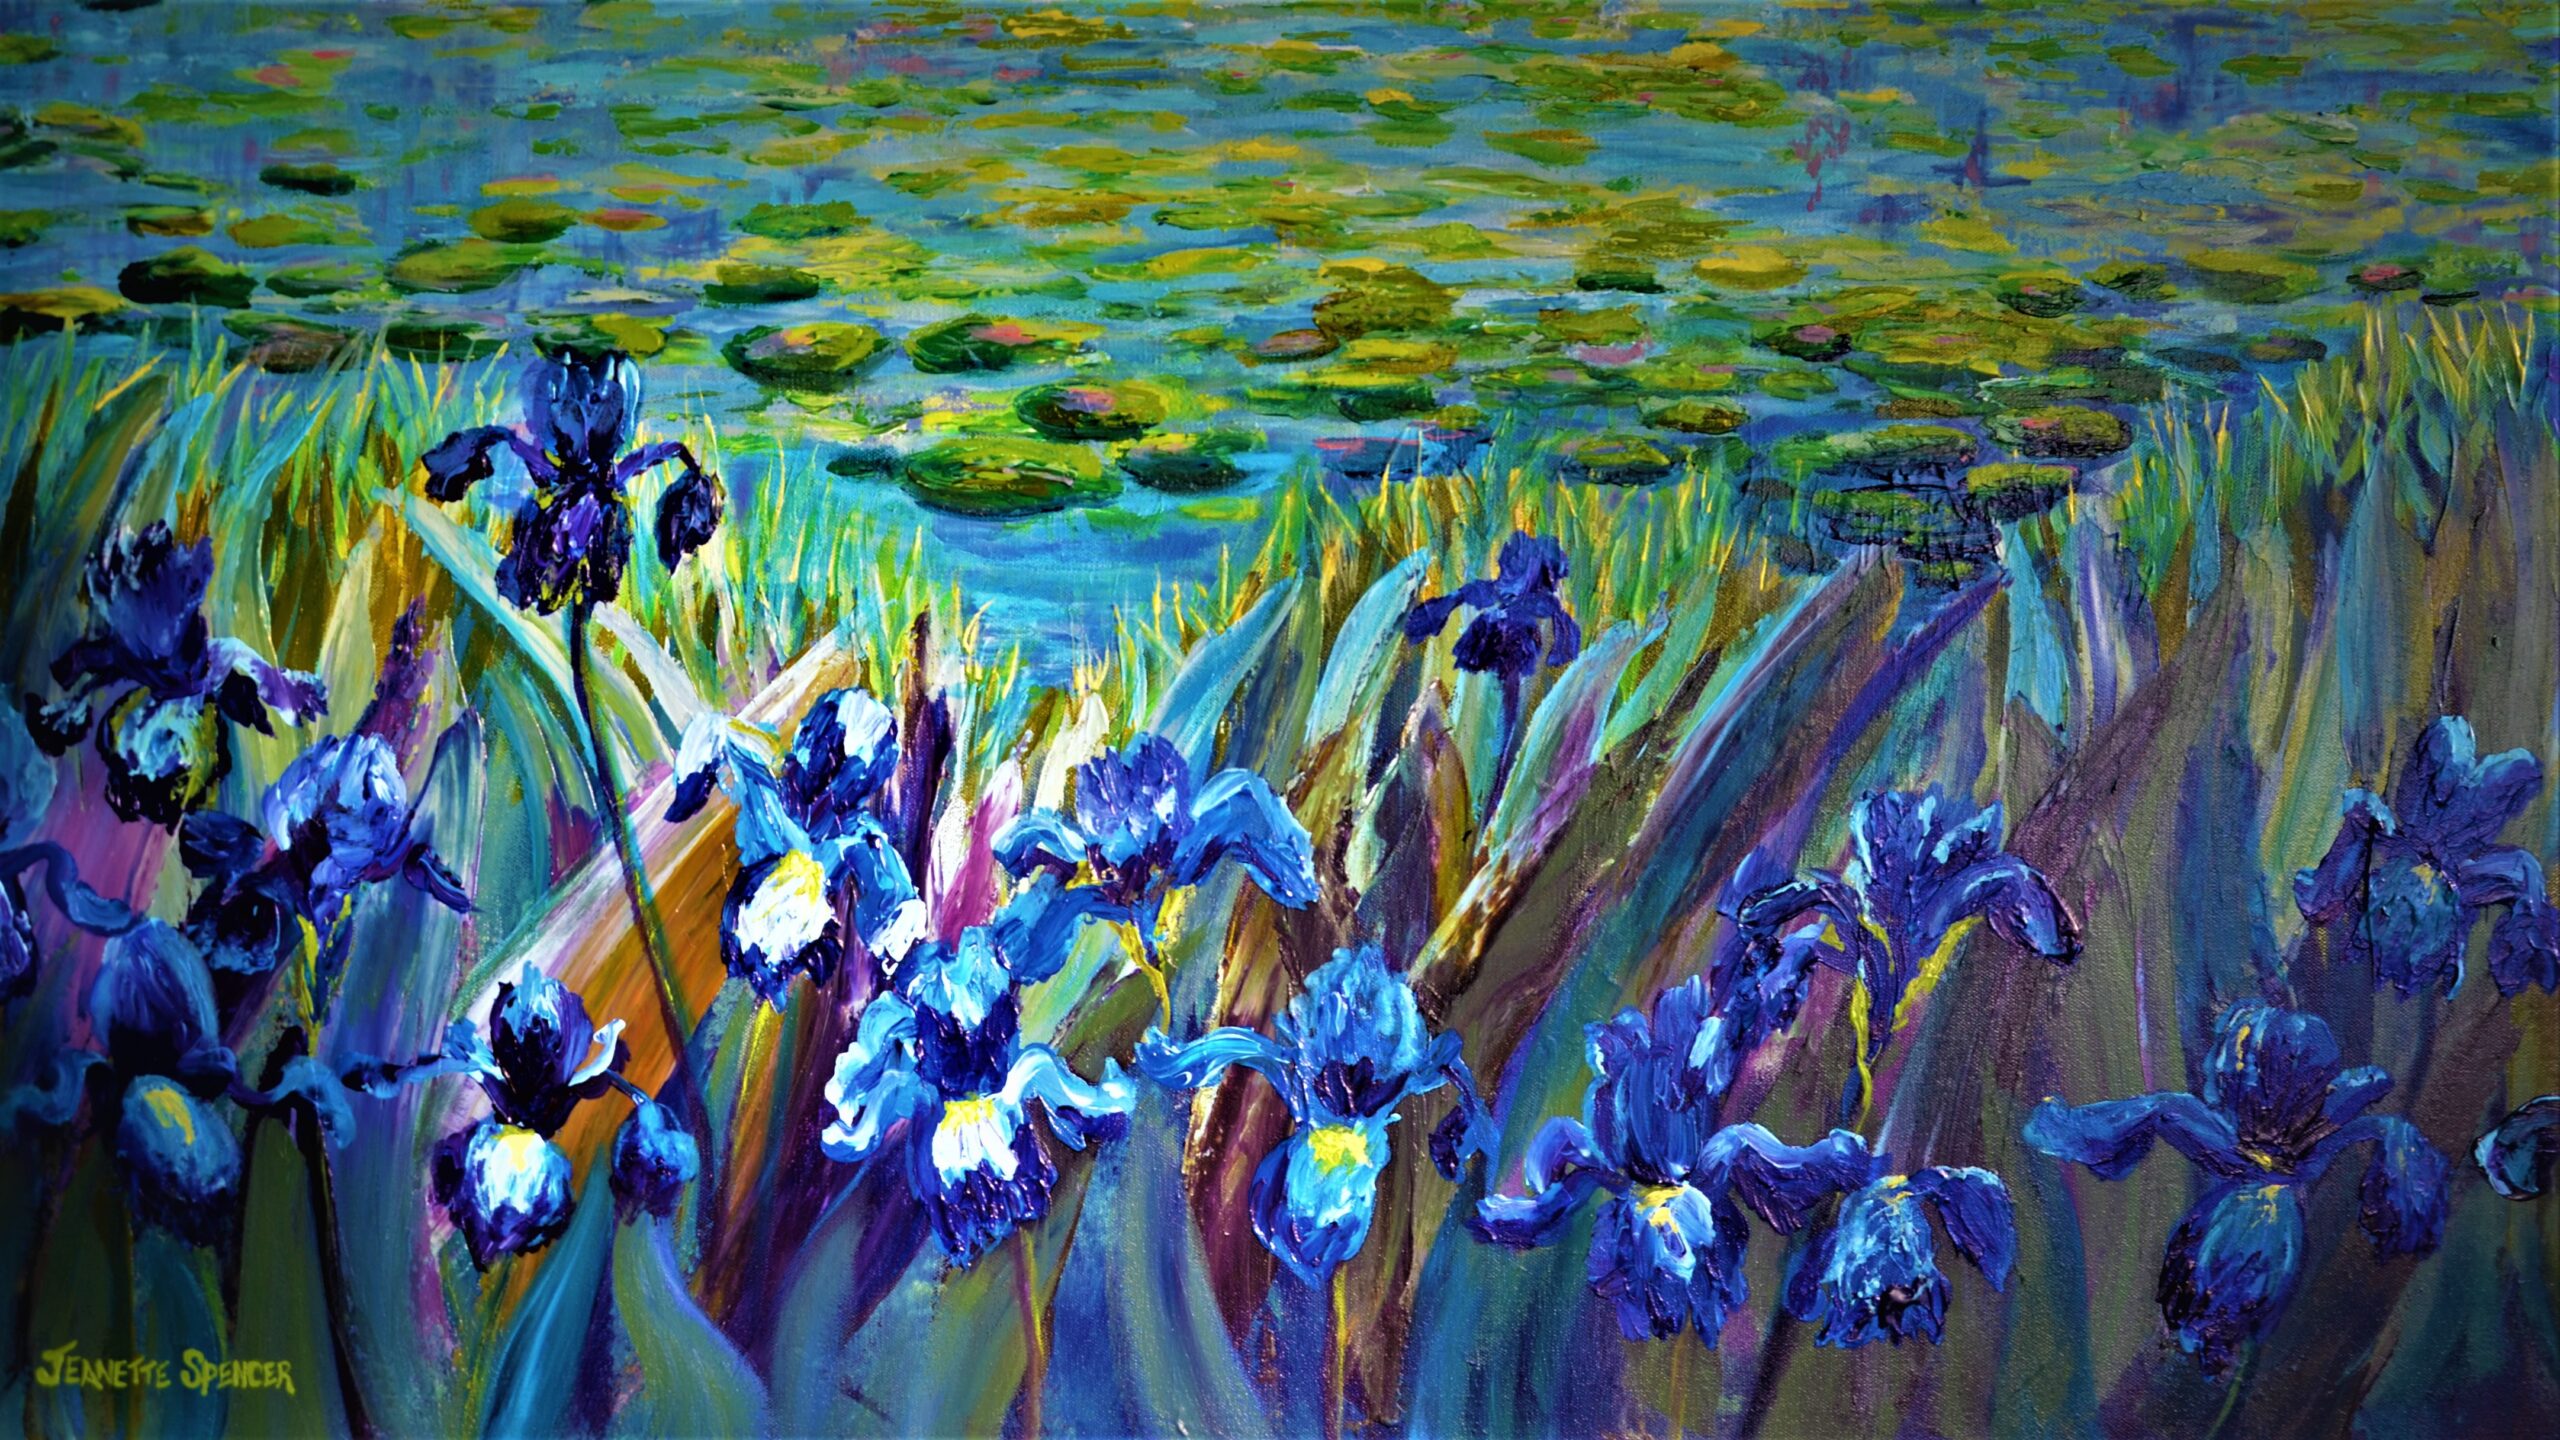 Irises/Lily pond